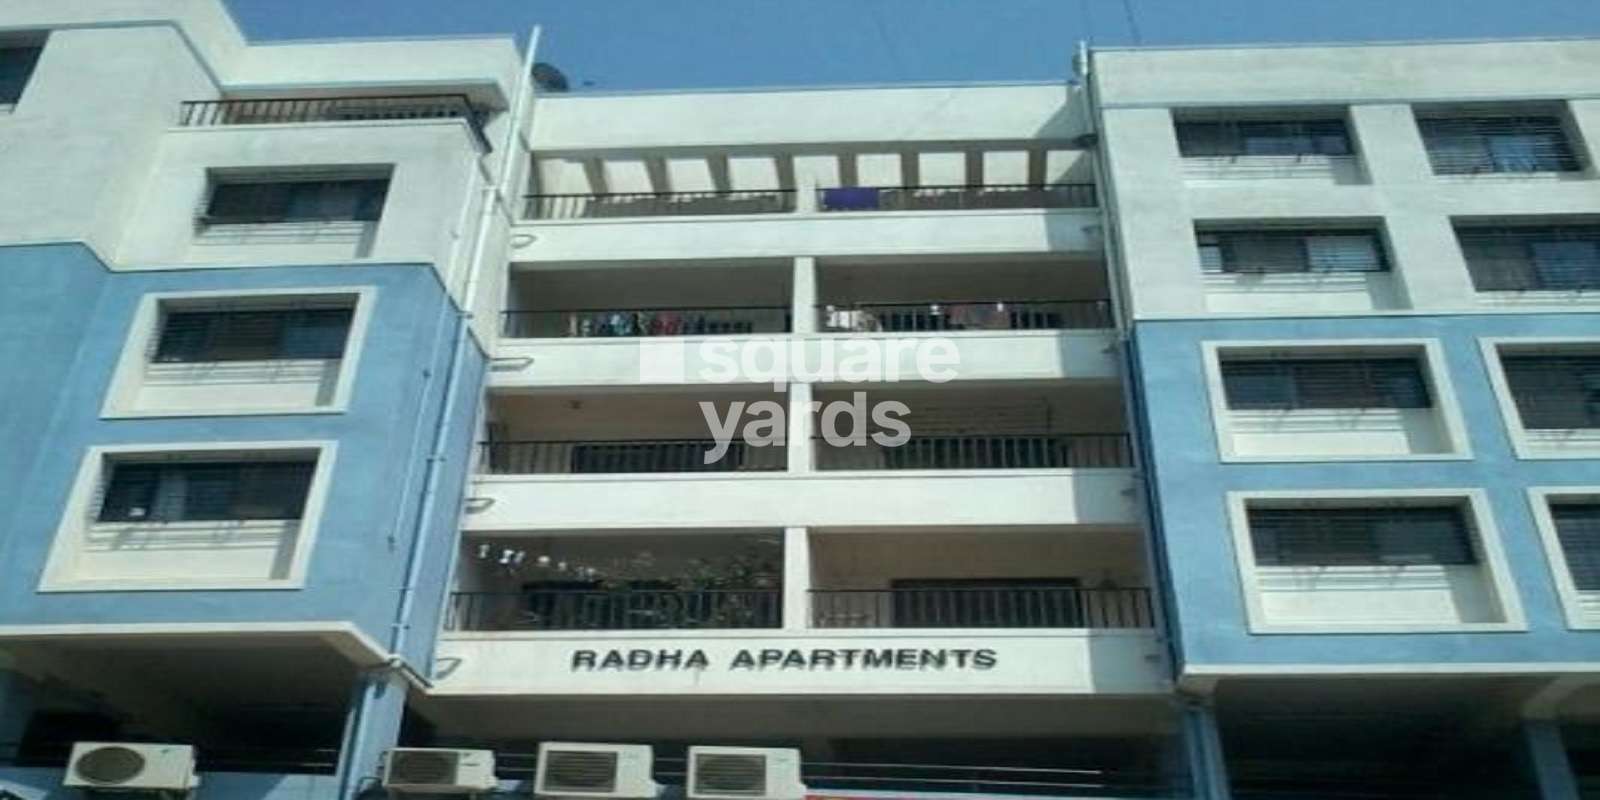 Radha Apartment Cover Image